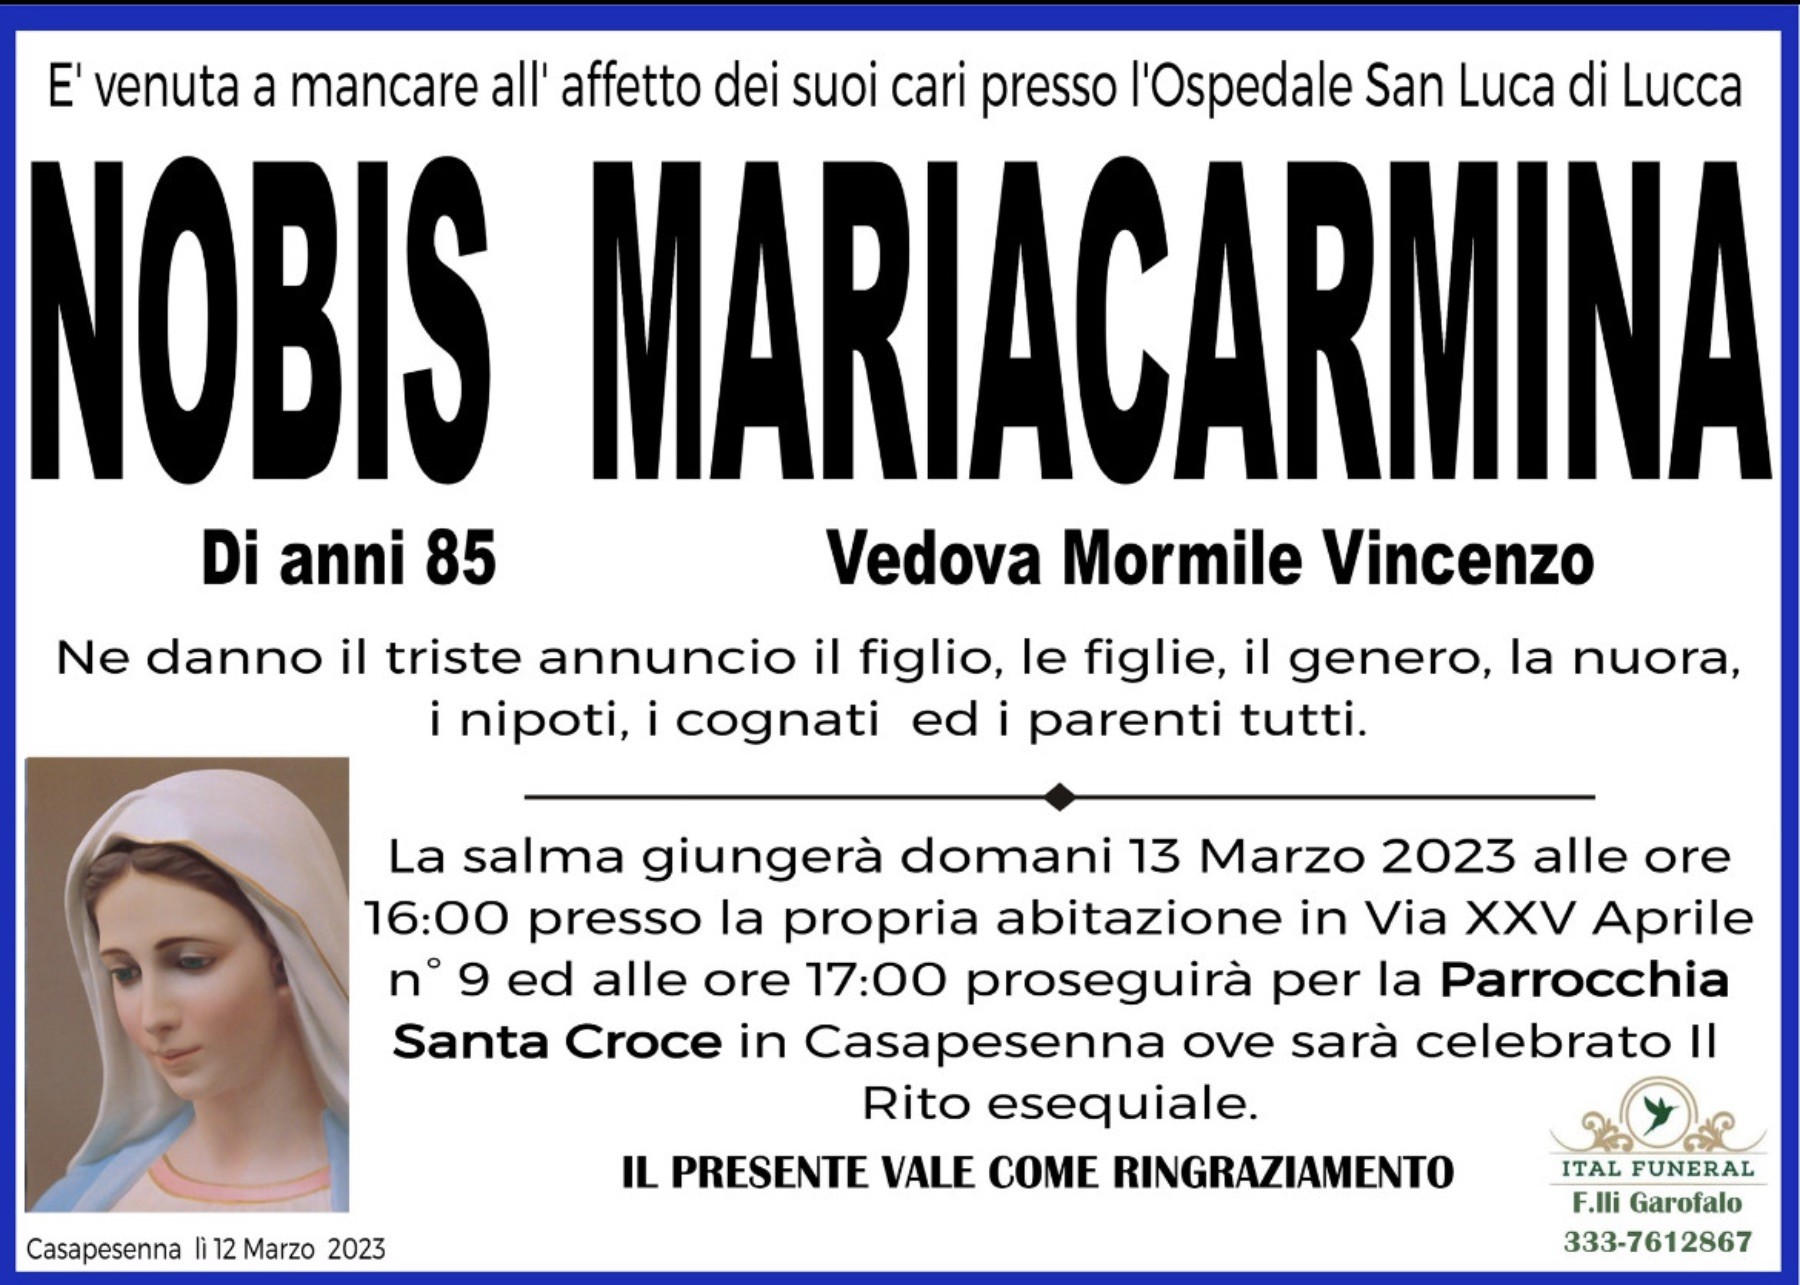 Mariacarmina Nobis